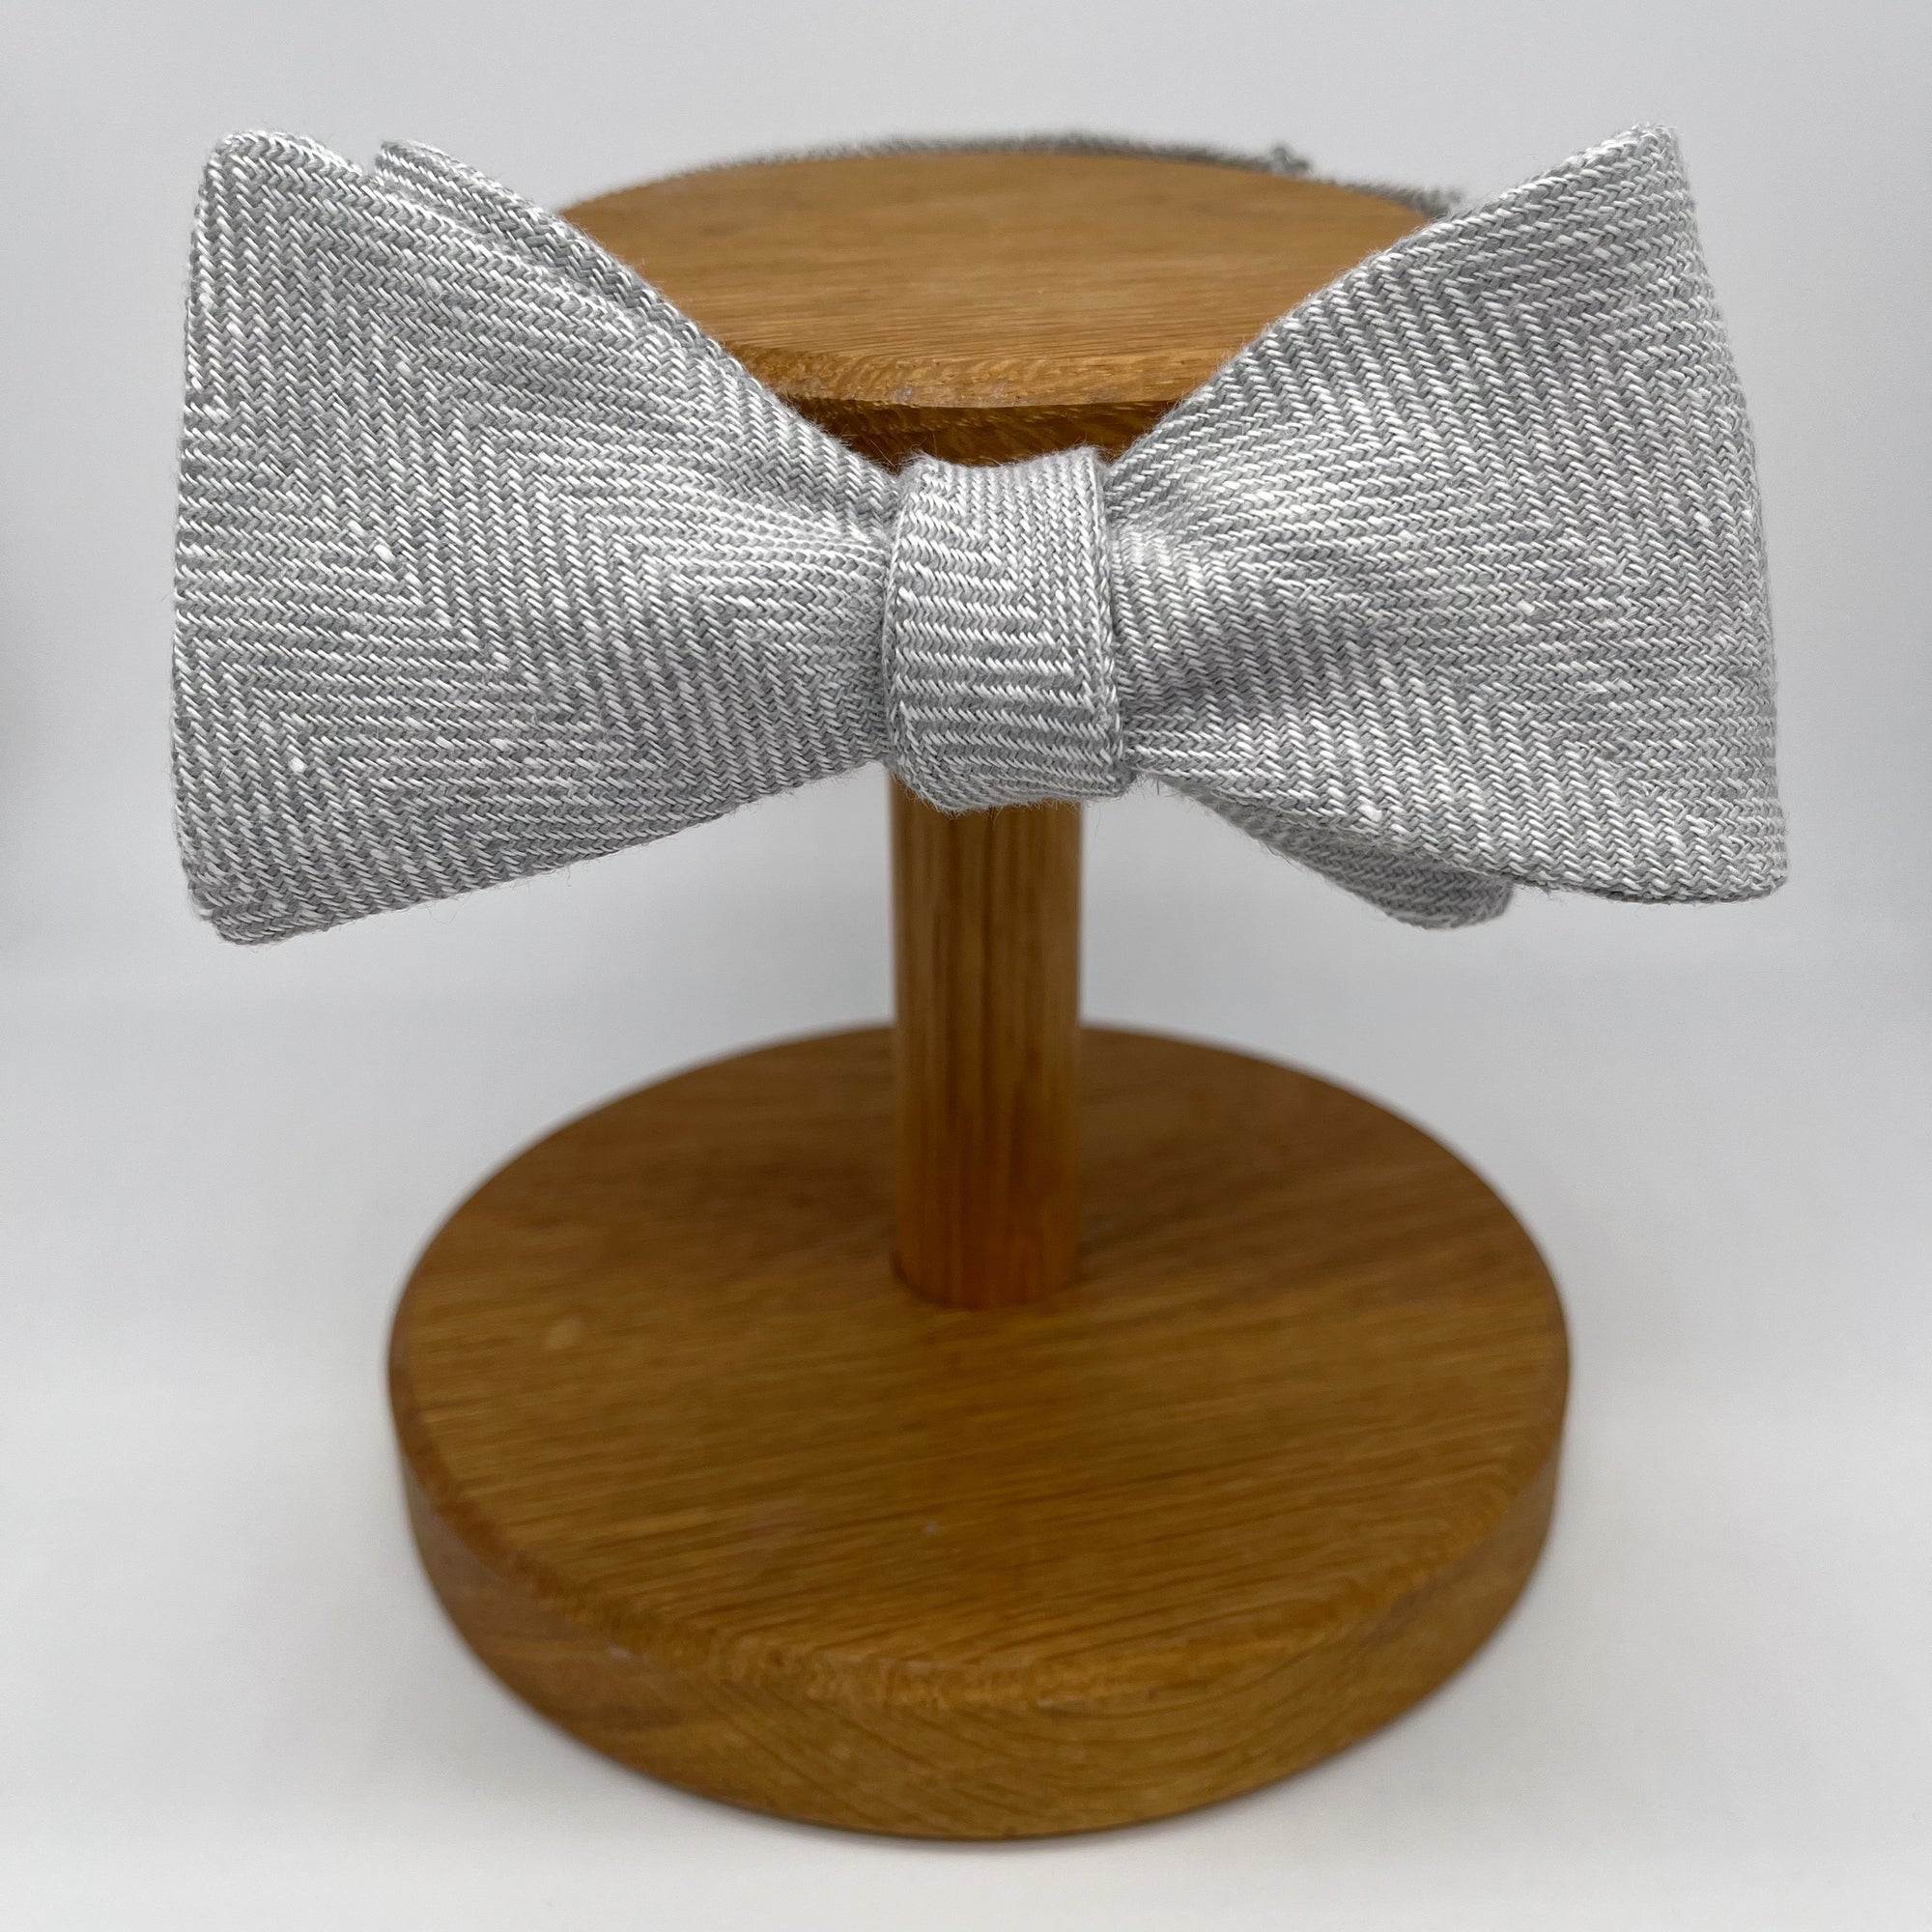 Self-tie bow tie in grey herringbone irish linen by the belfast bow company